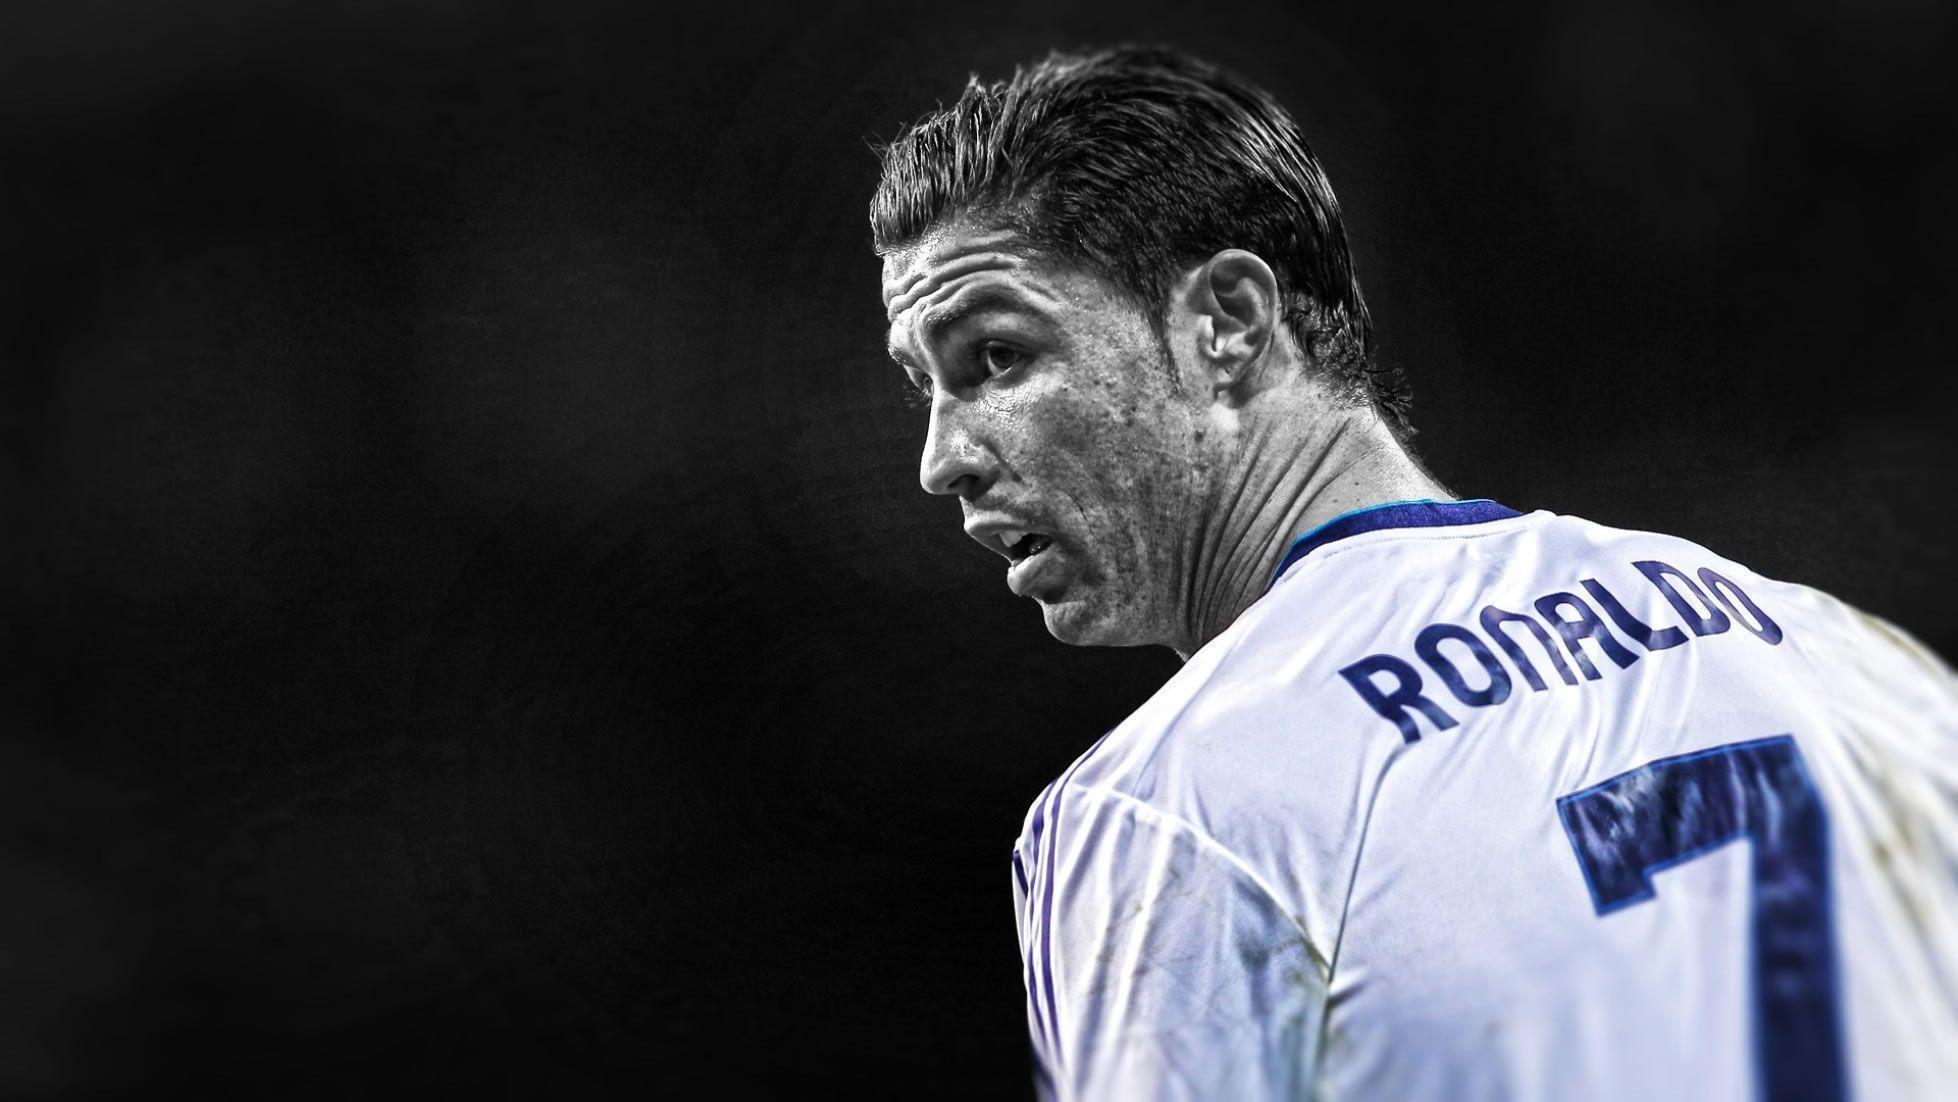 Ronaldo 7 Wallpaper